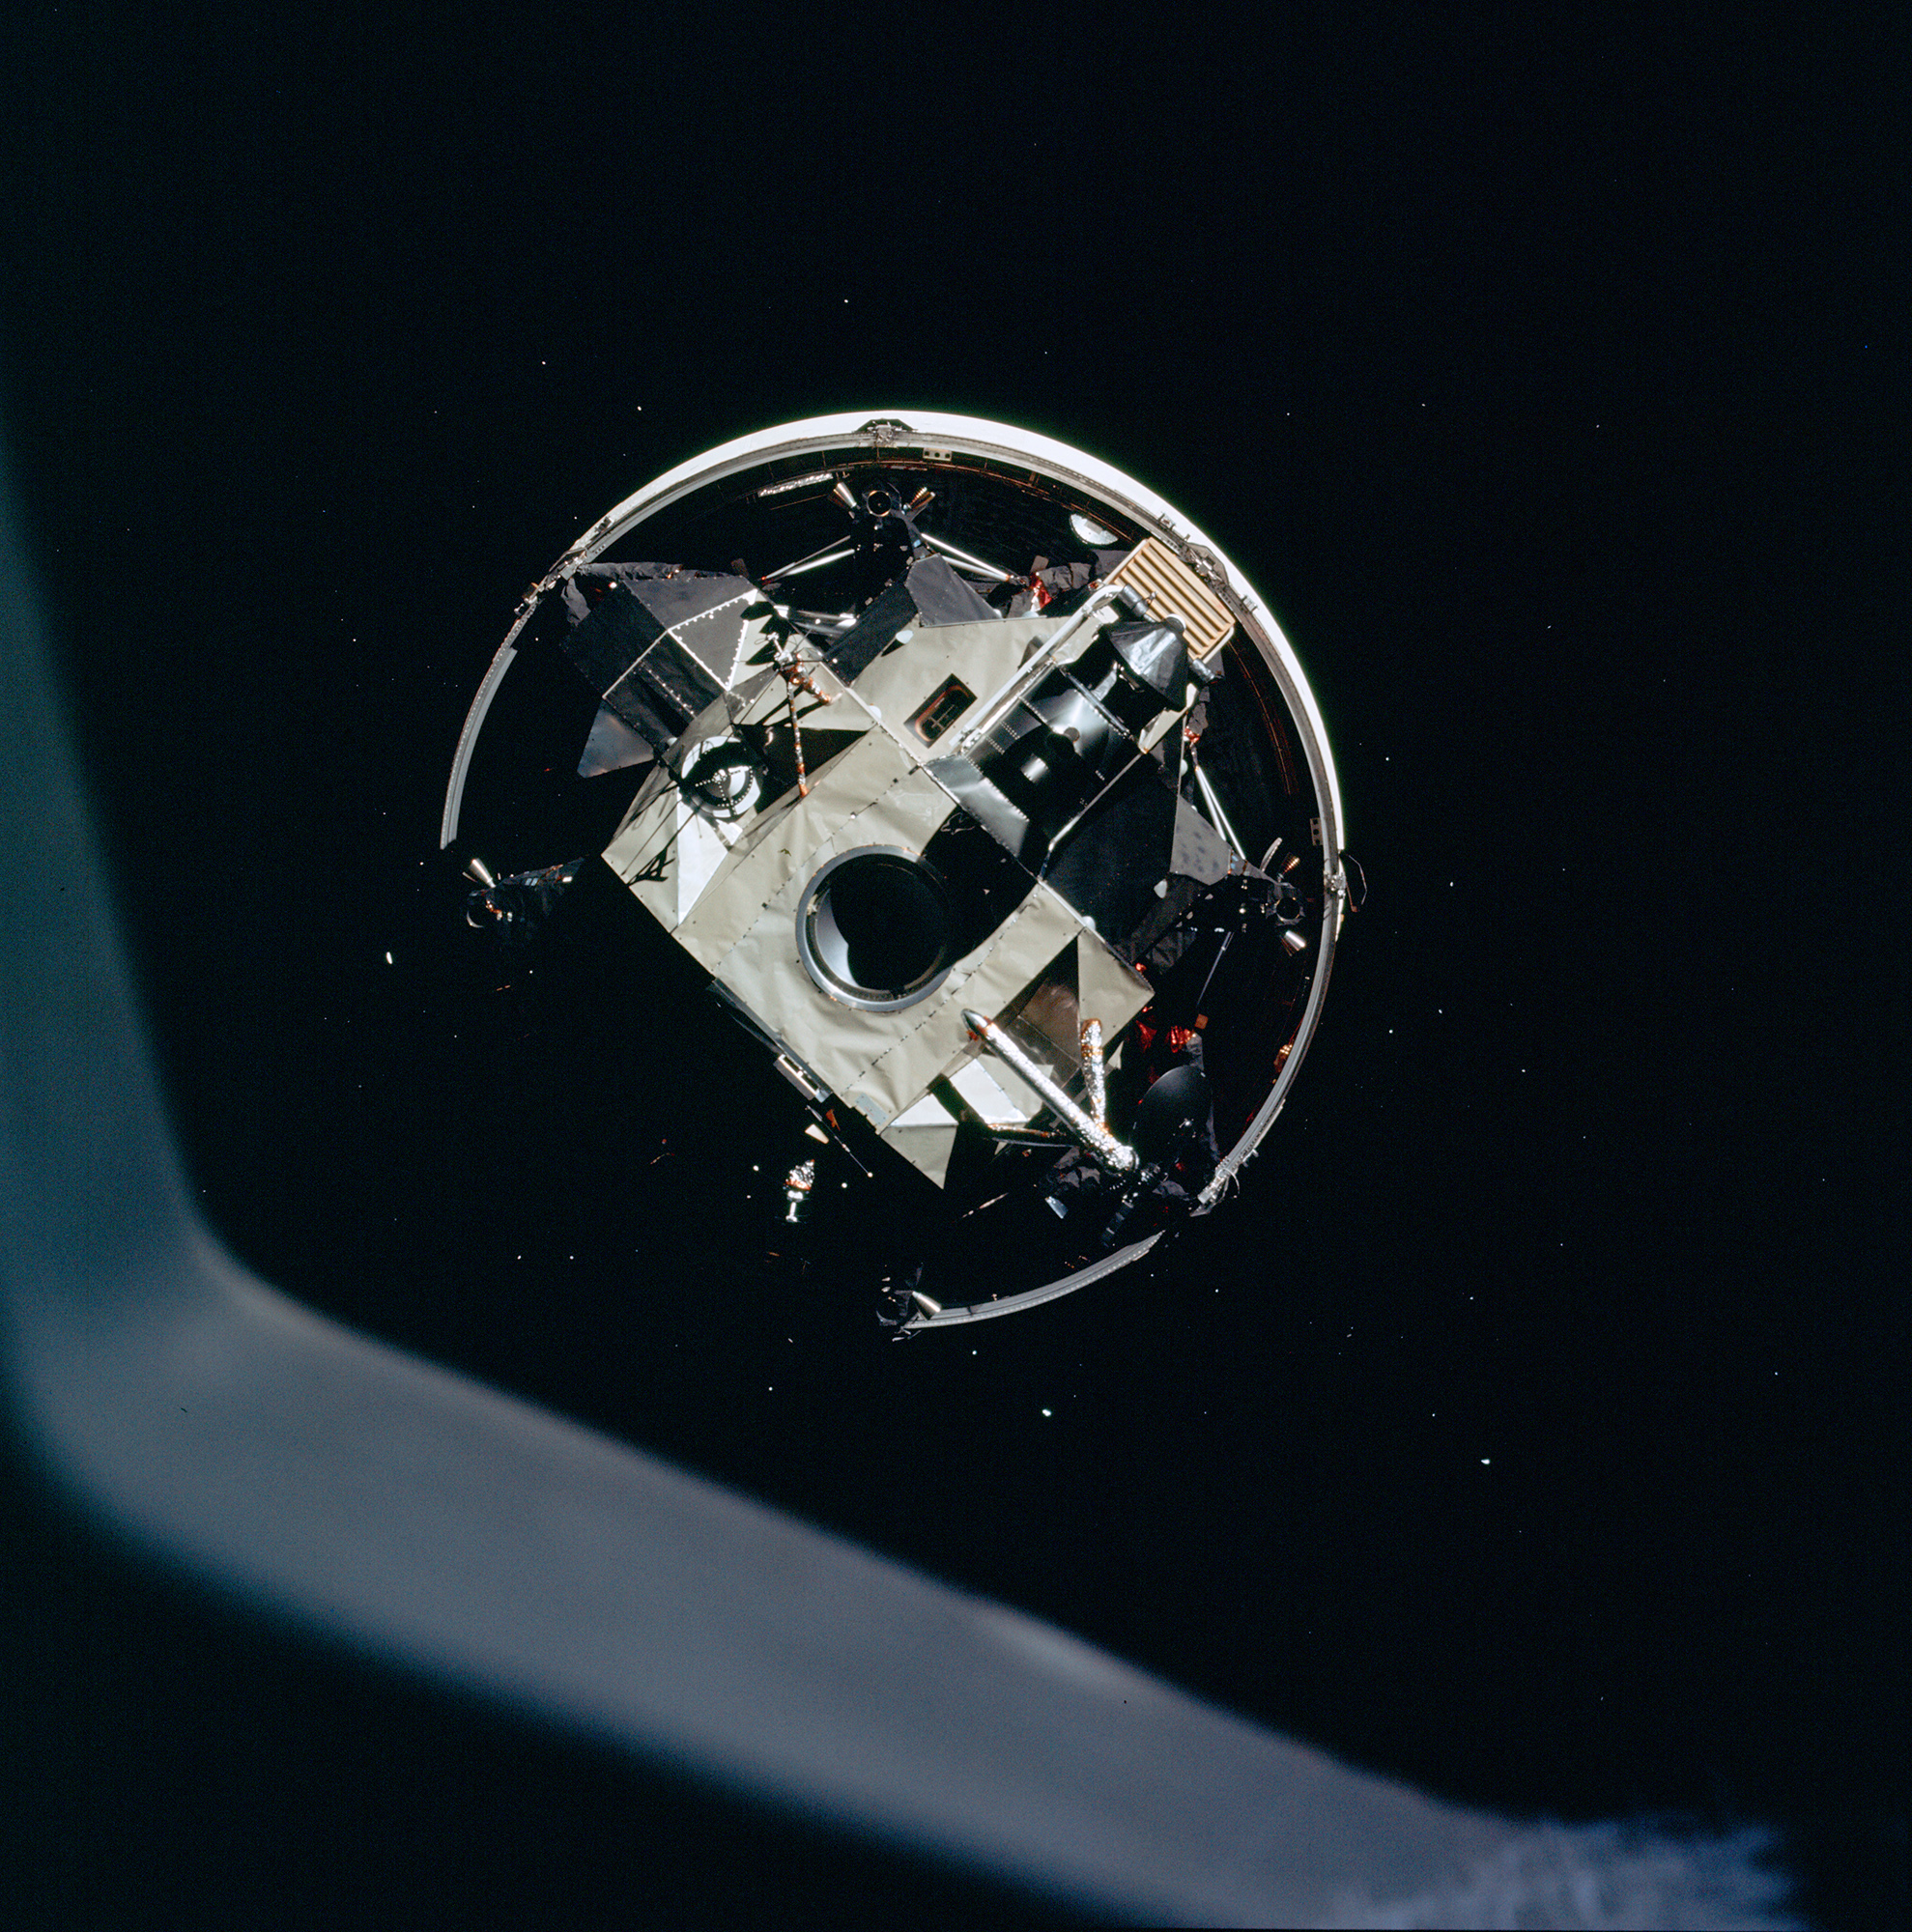 apollo-11-lunar-module-prior-to-extraction.jpg